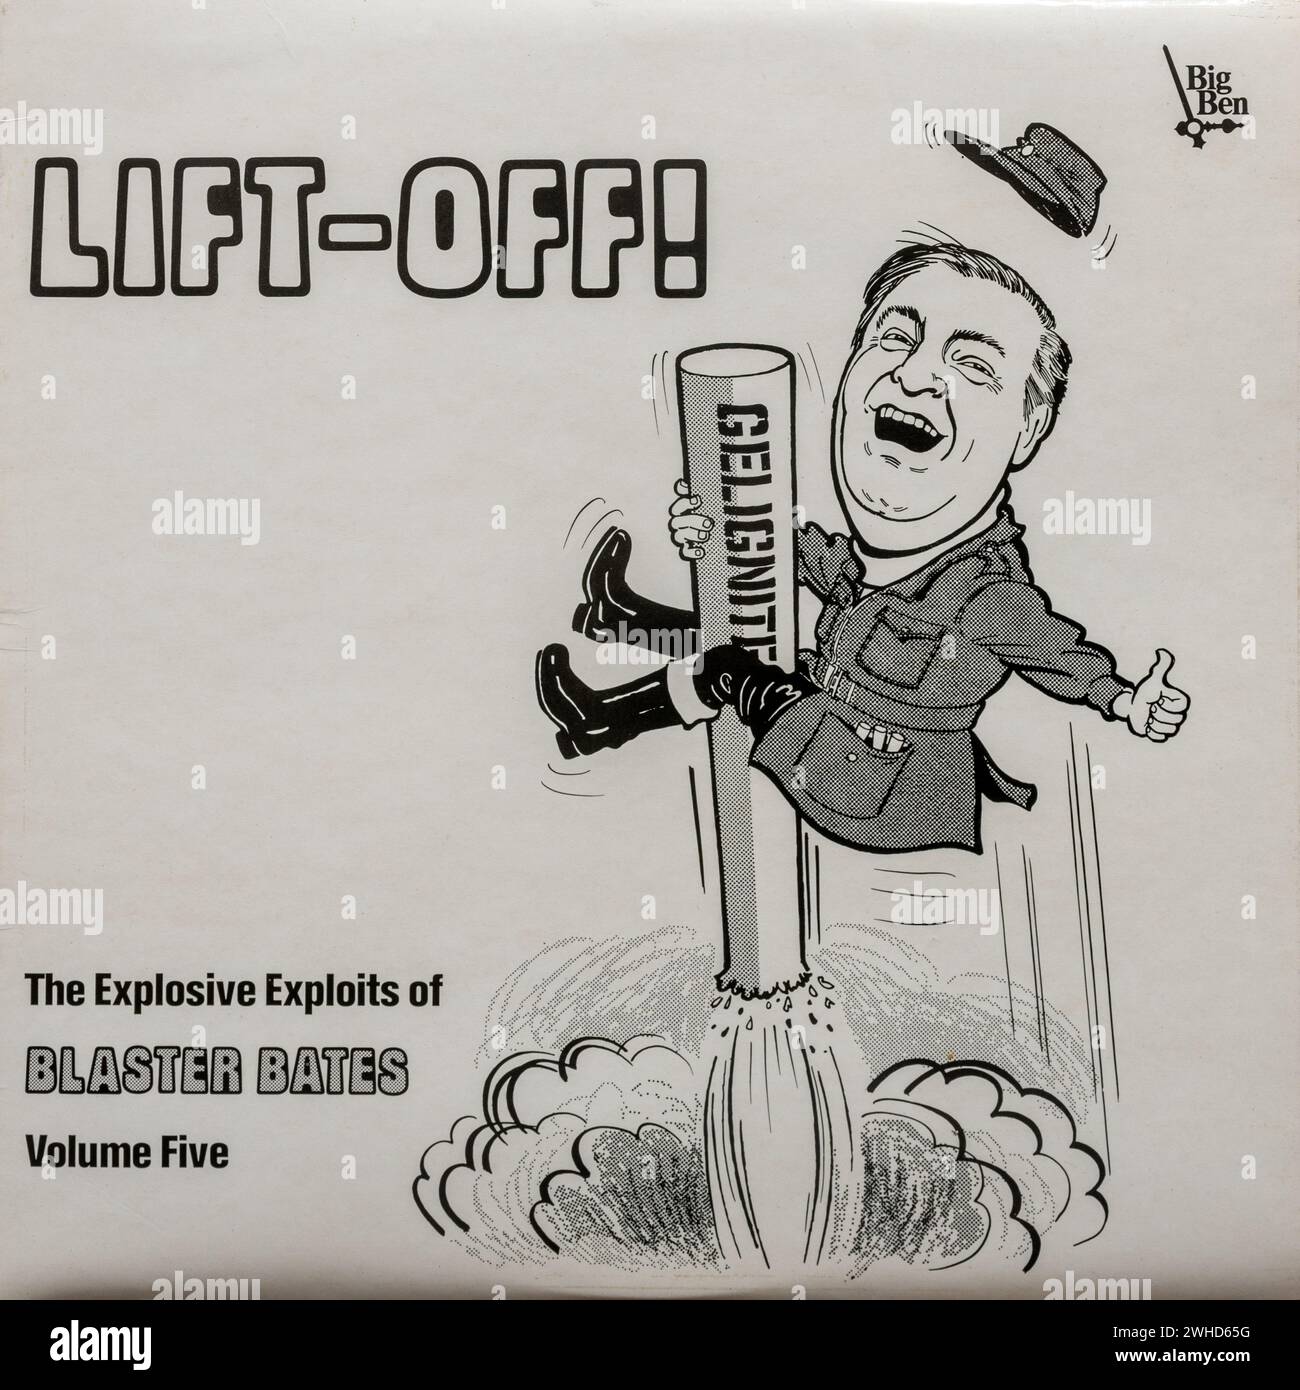 Lift-Off! The Explosive Exploits Of Blaster Bates: Volume Five, vinyl LP record album cover Stock Photo